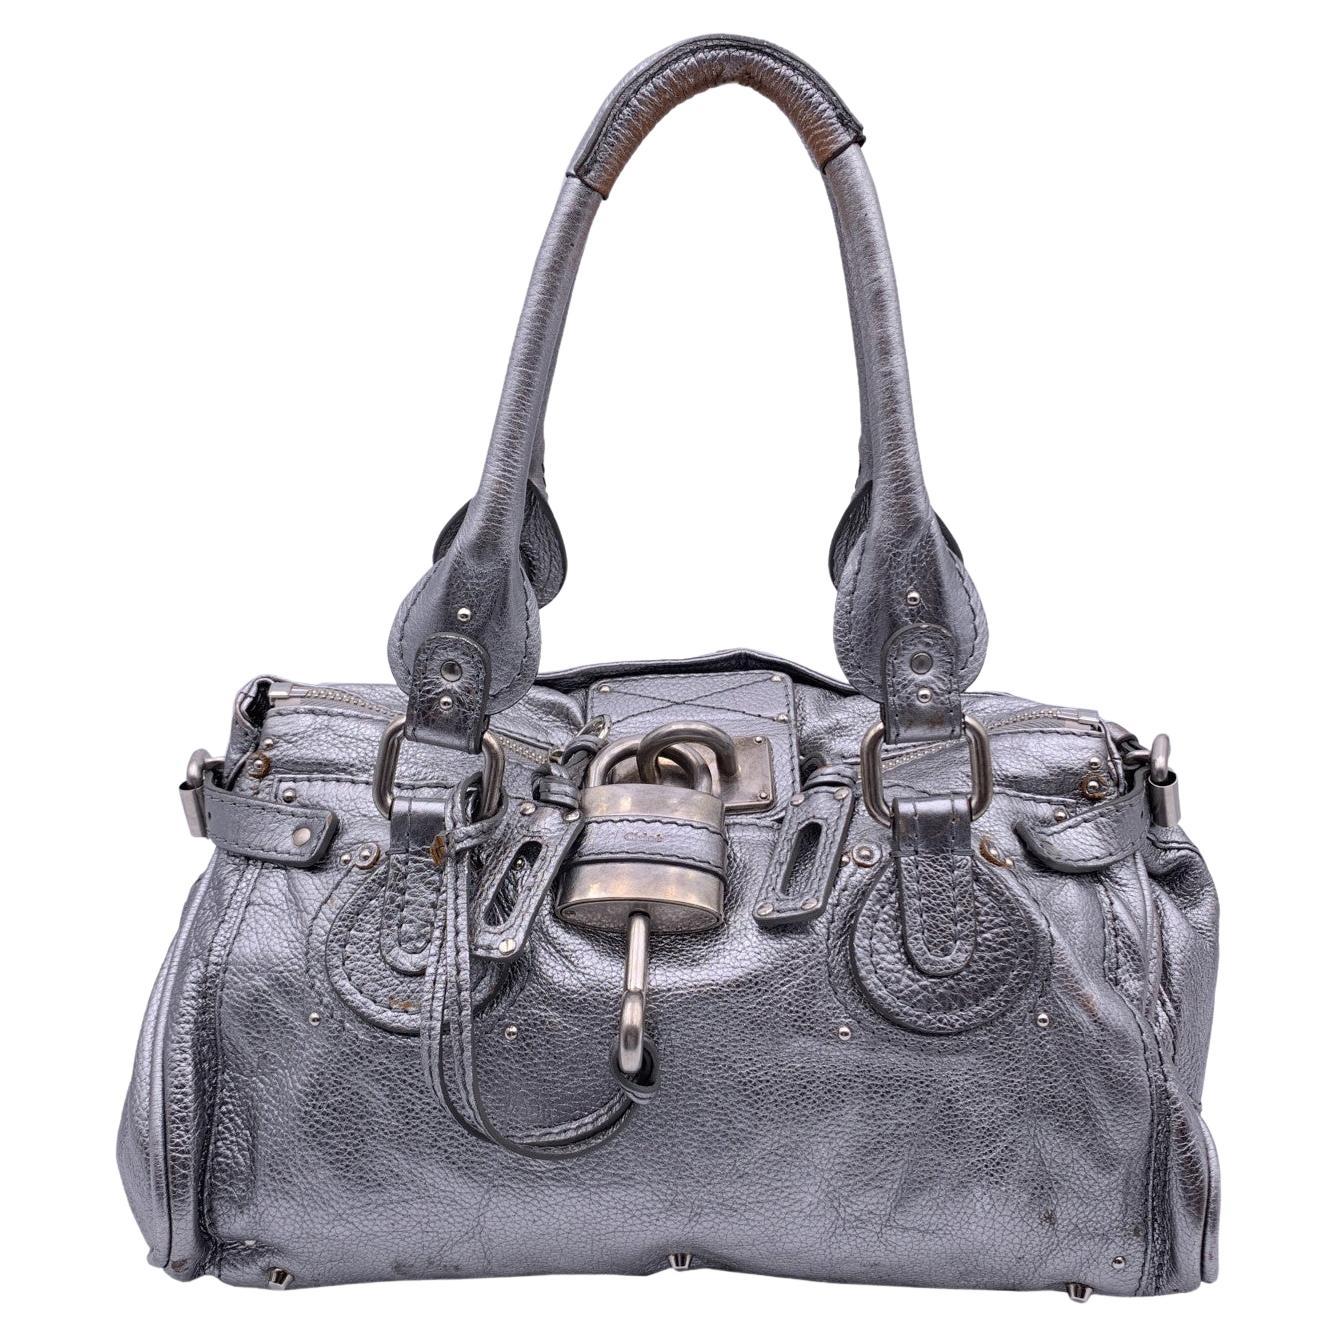 Chloe Silver Metal Leather Paddington Tote Bag Satchel Handbag